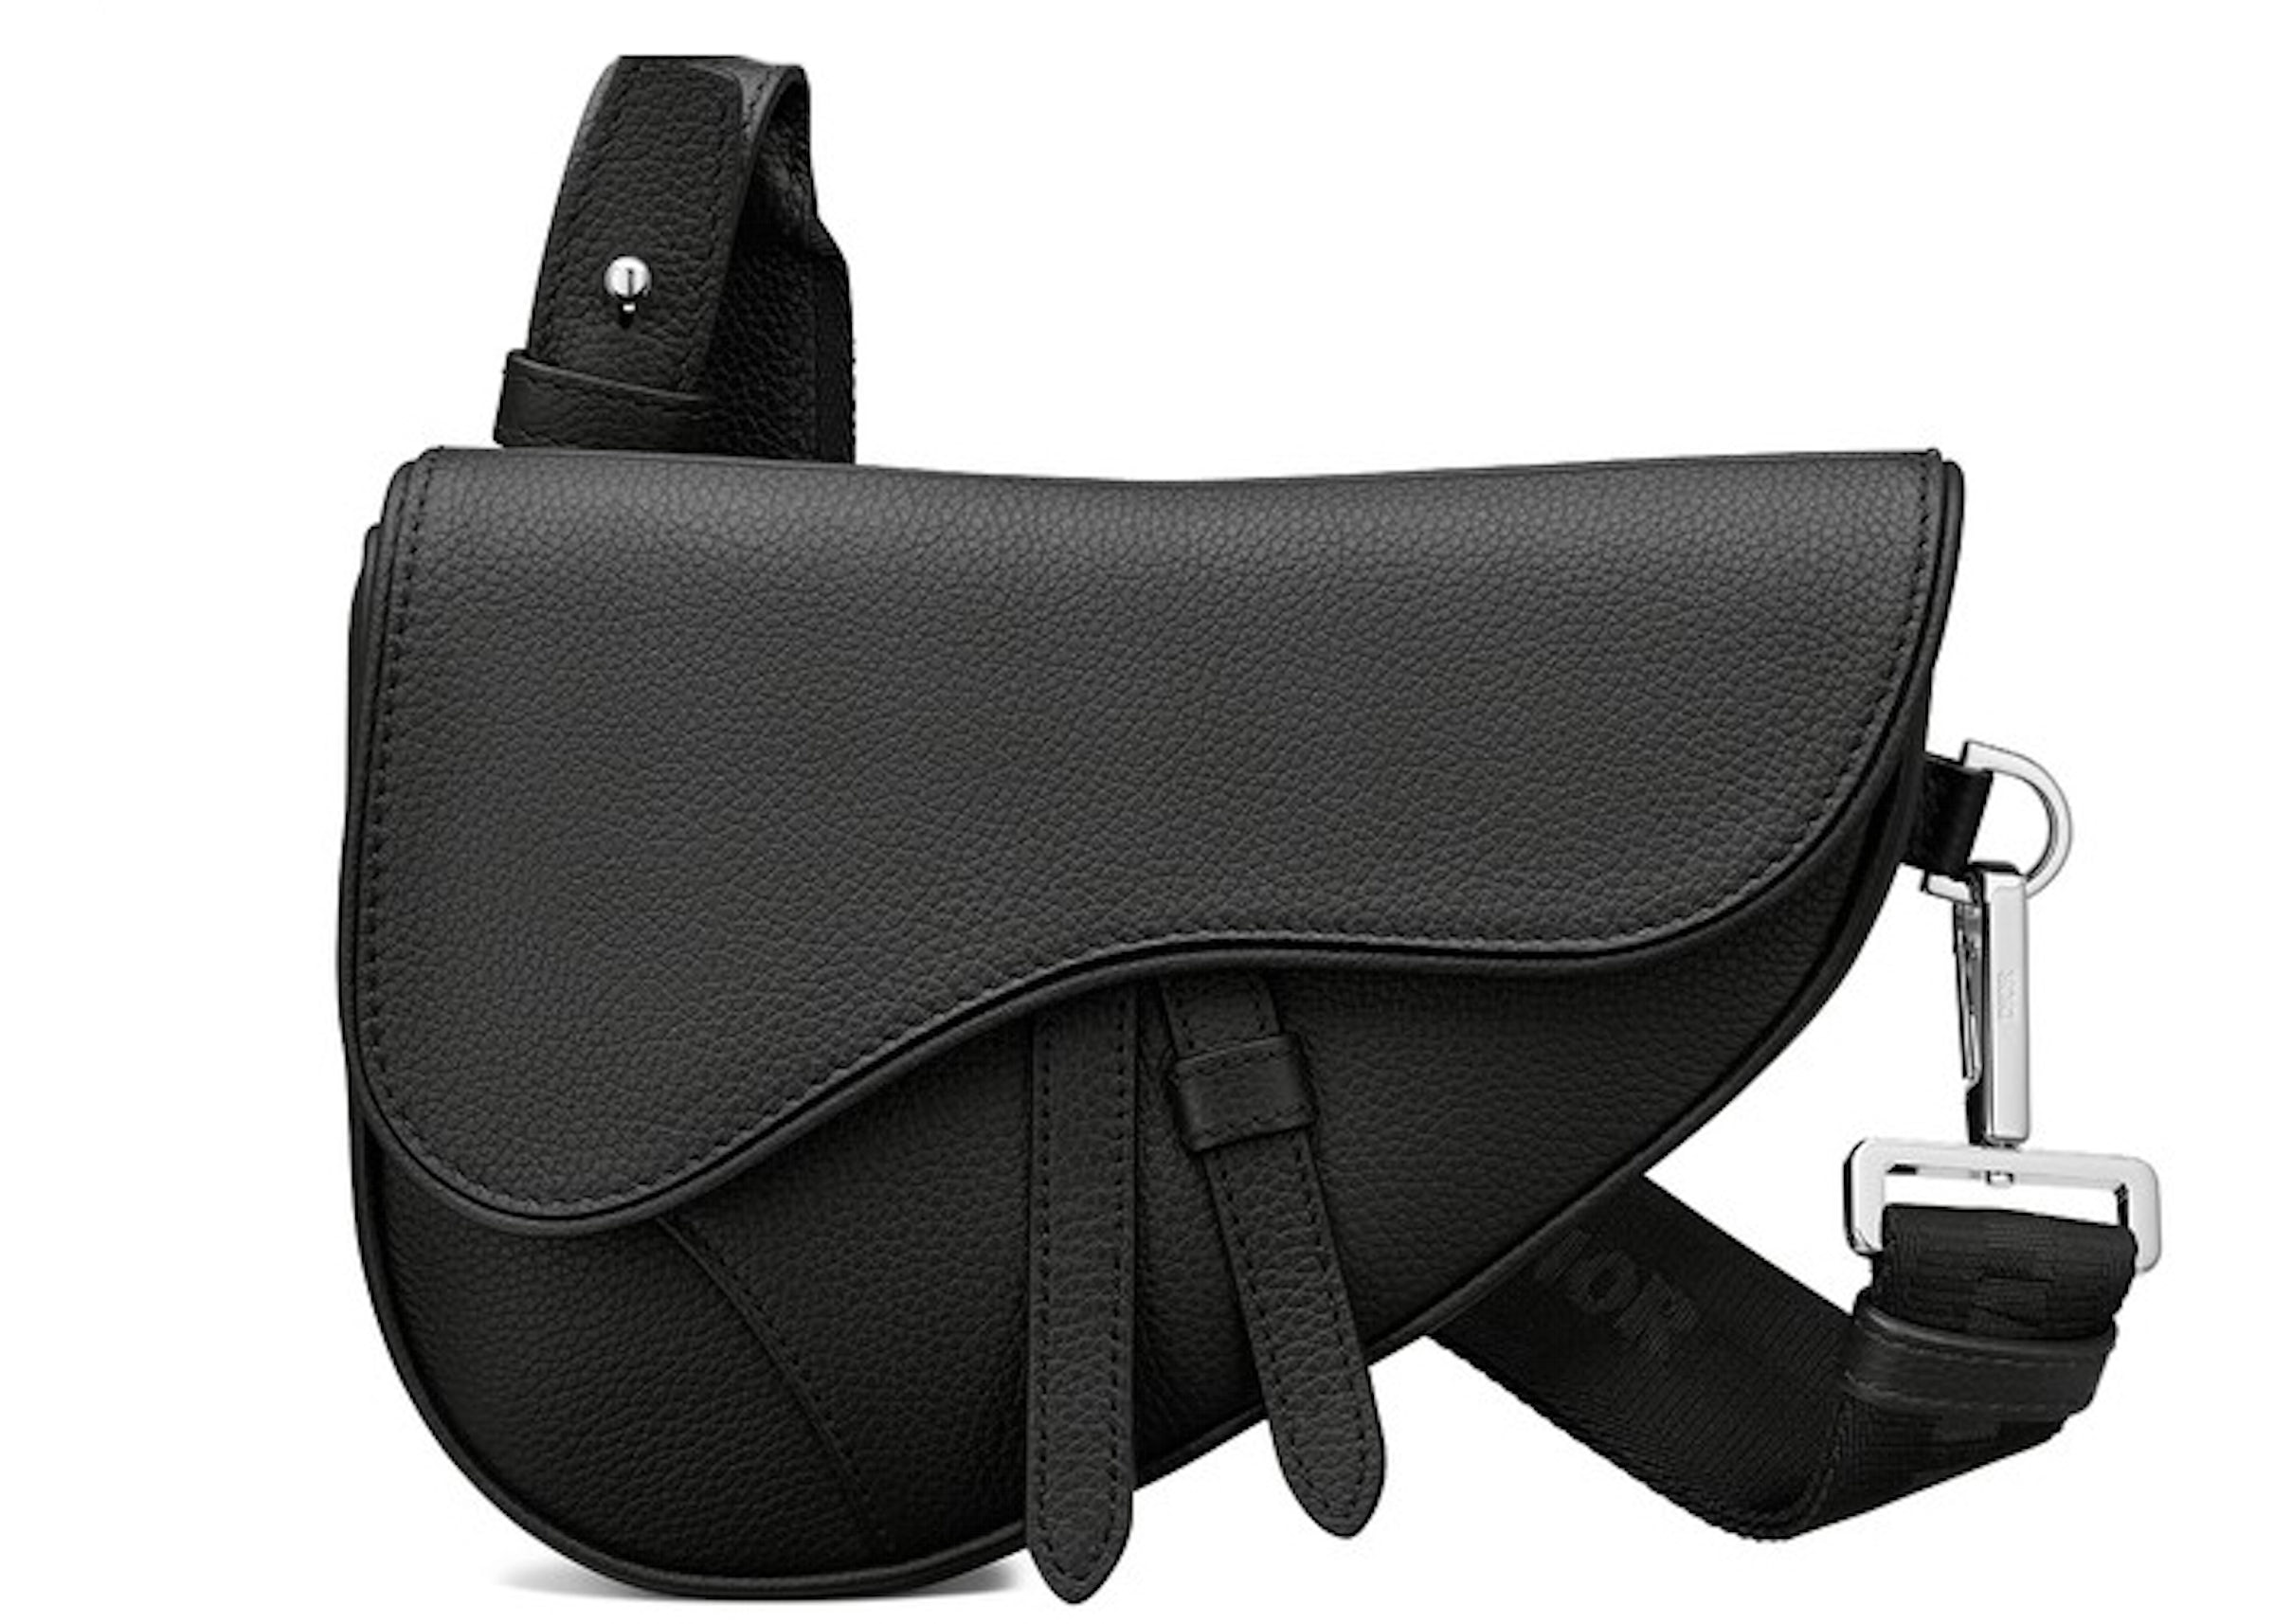 dior saddle bag black and white